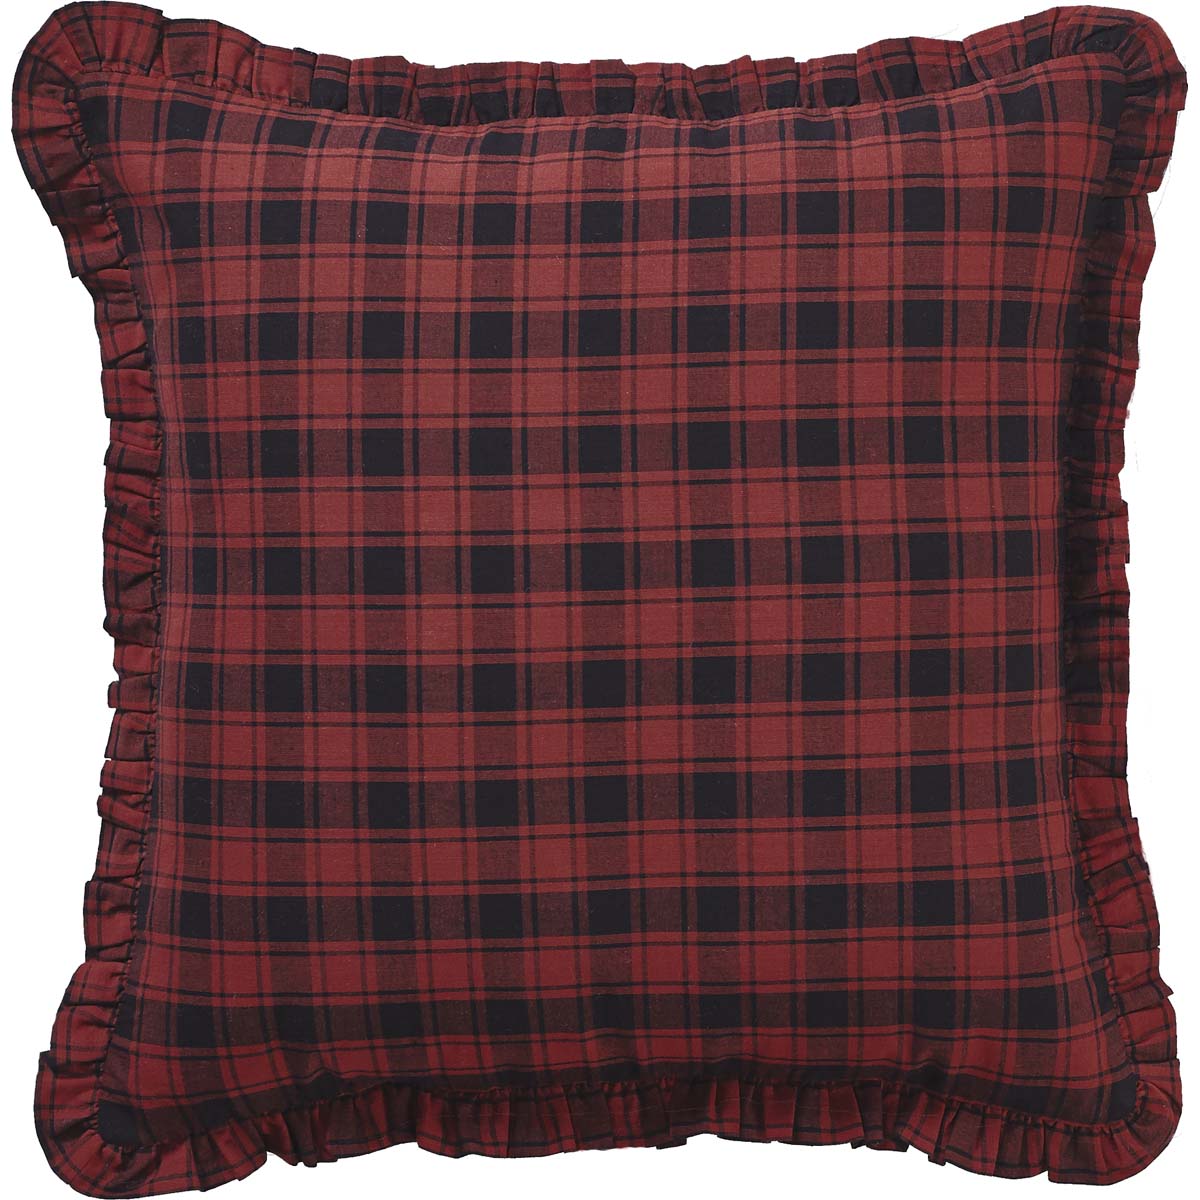 Cumberland Plaid Pillow 18x18